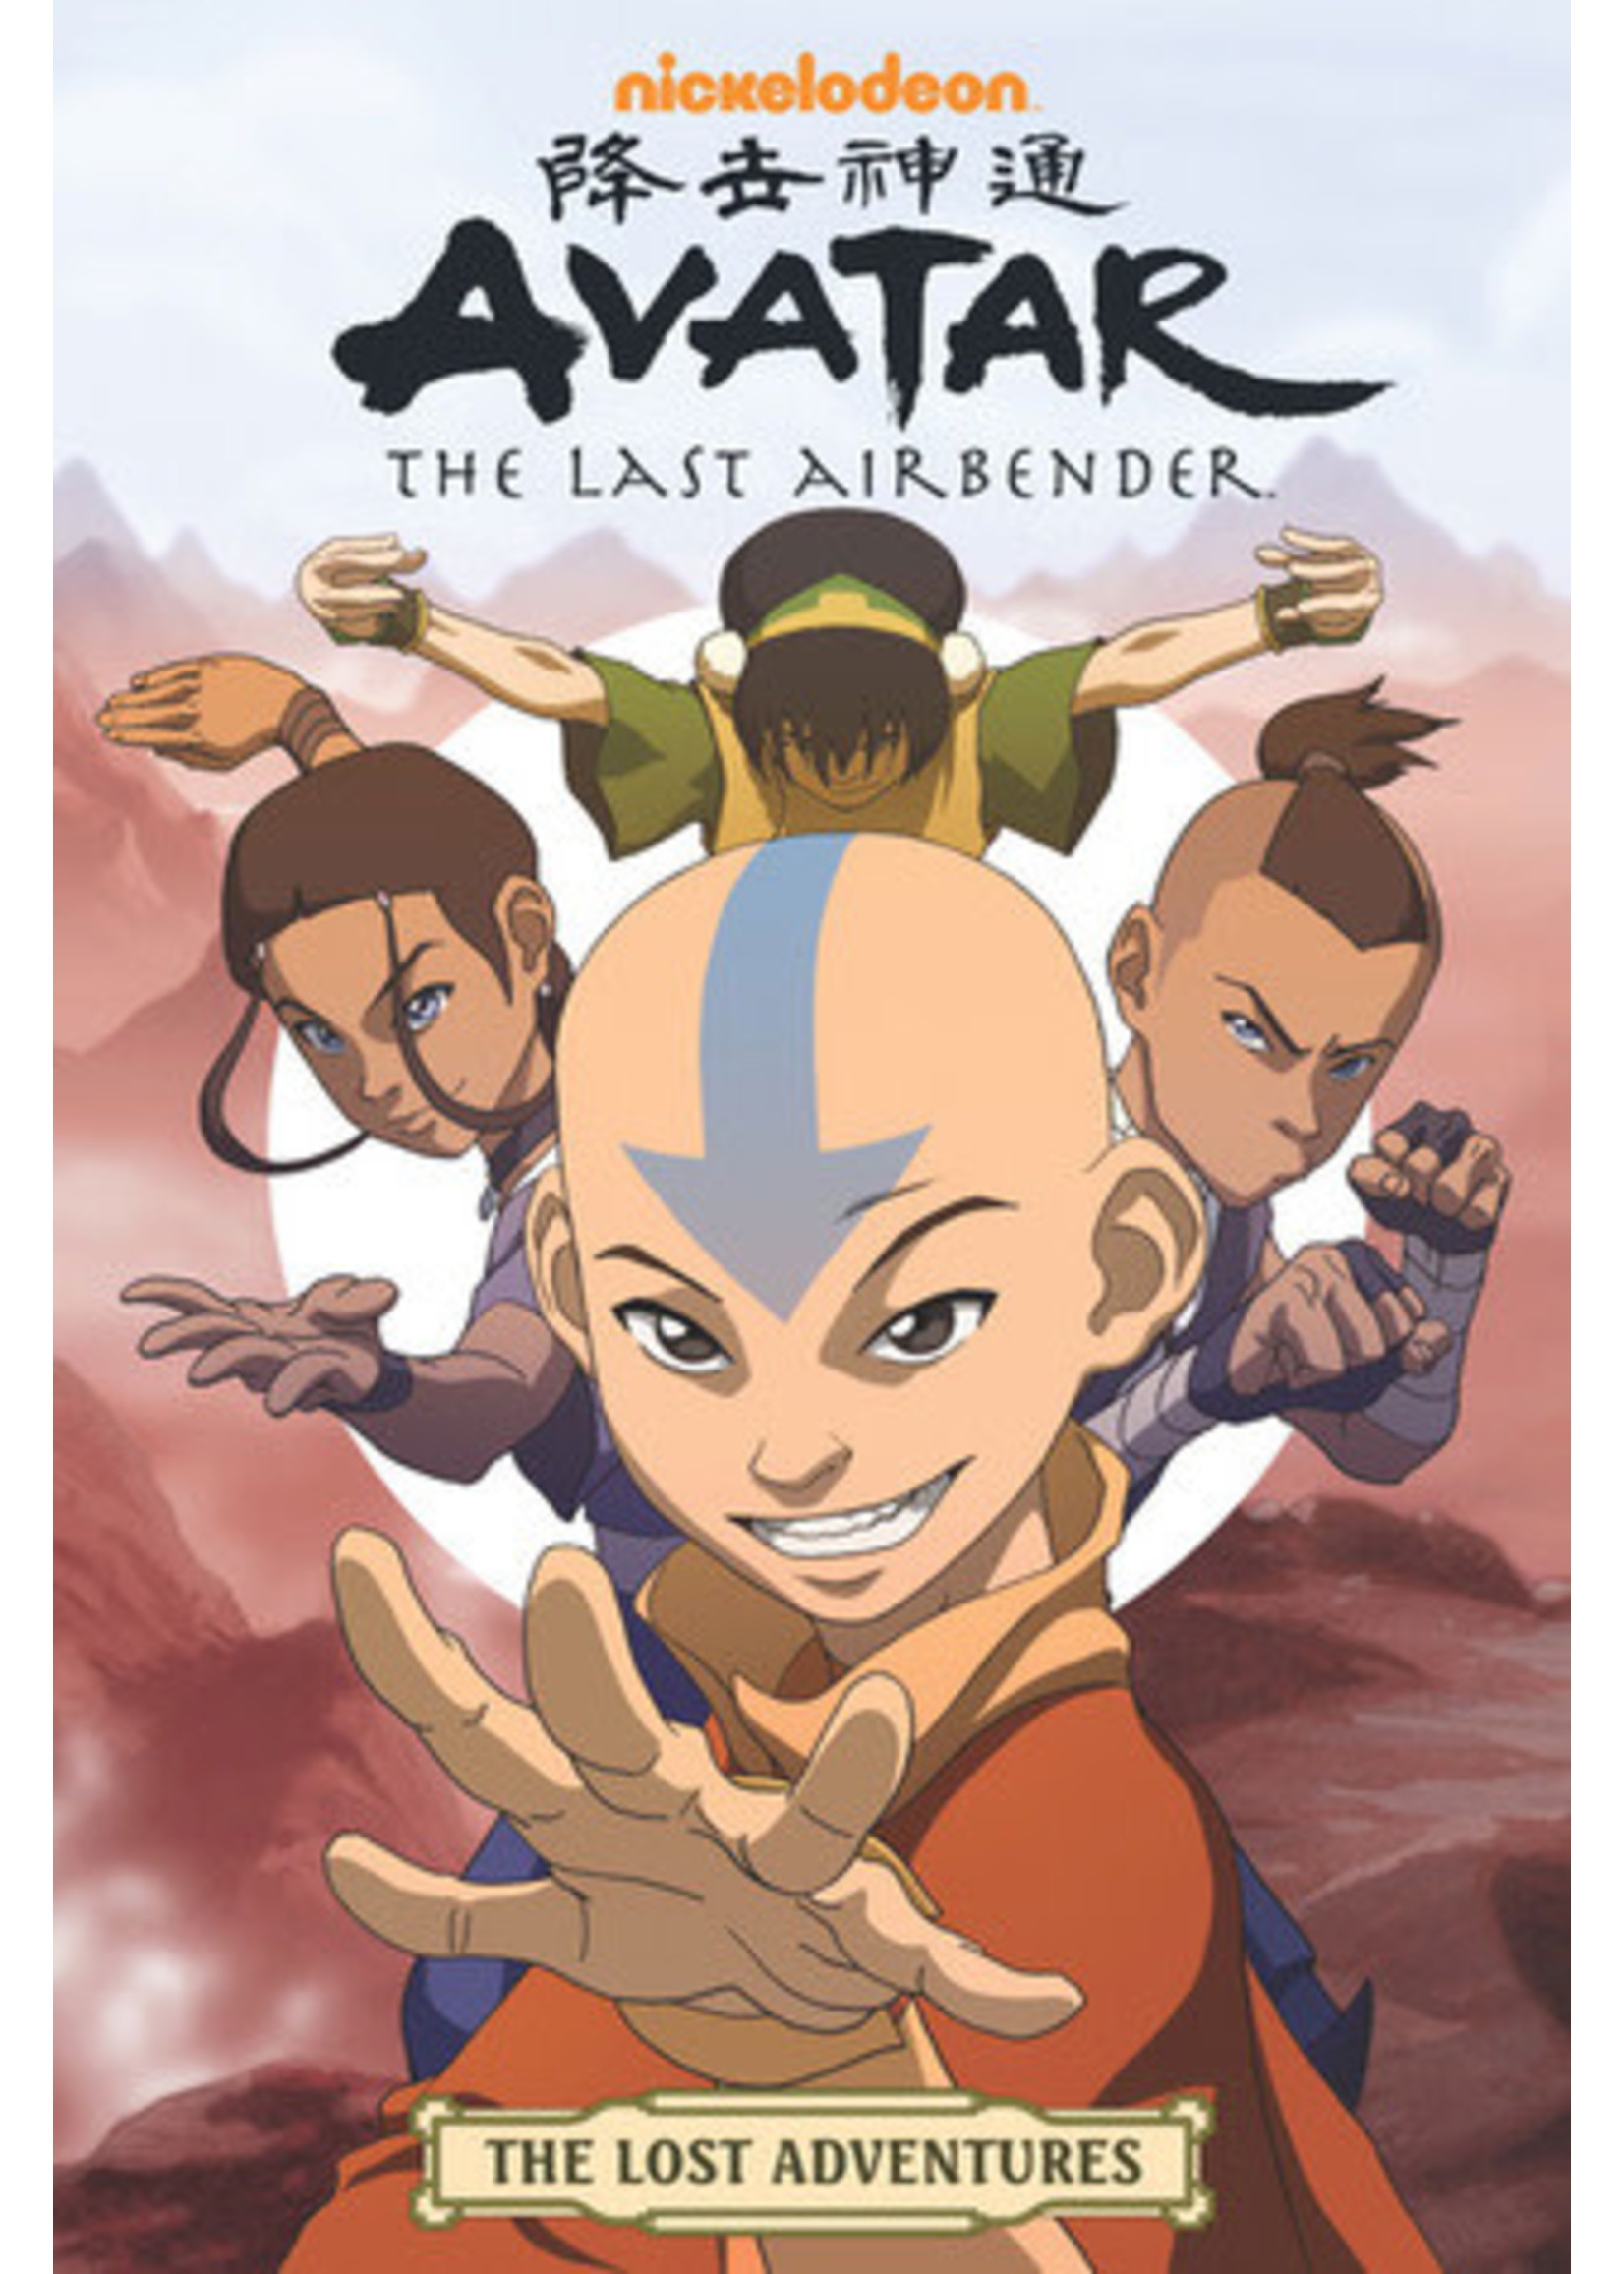 The Lost Adventures (Avatar: The Last Airbender #0.1) by Bryan Konietzko, Michael Dante DiMartino